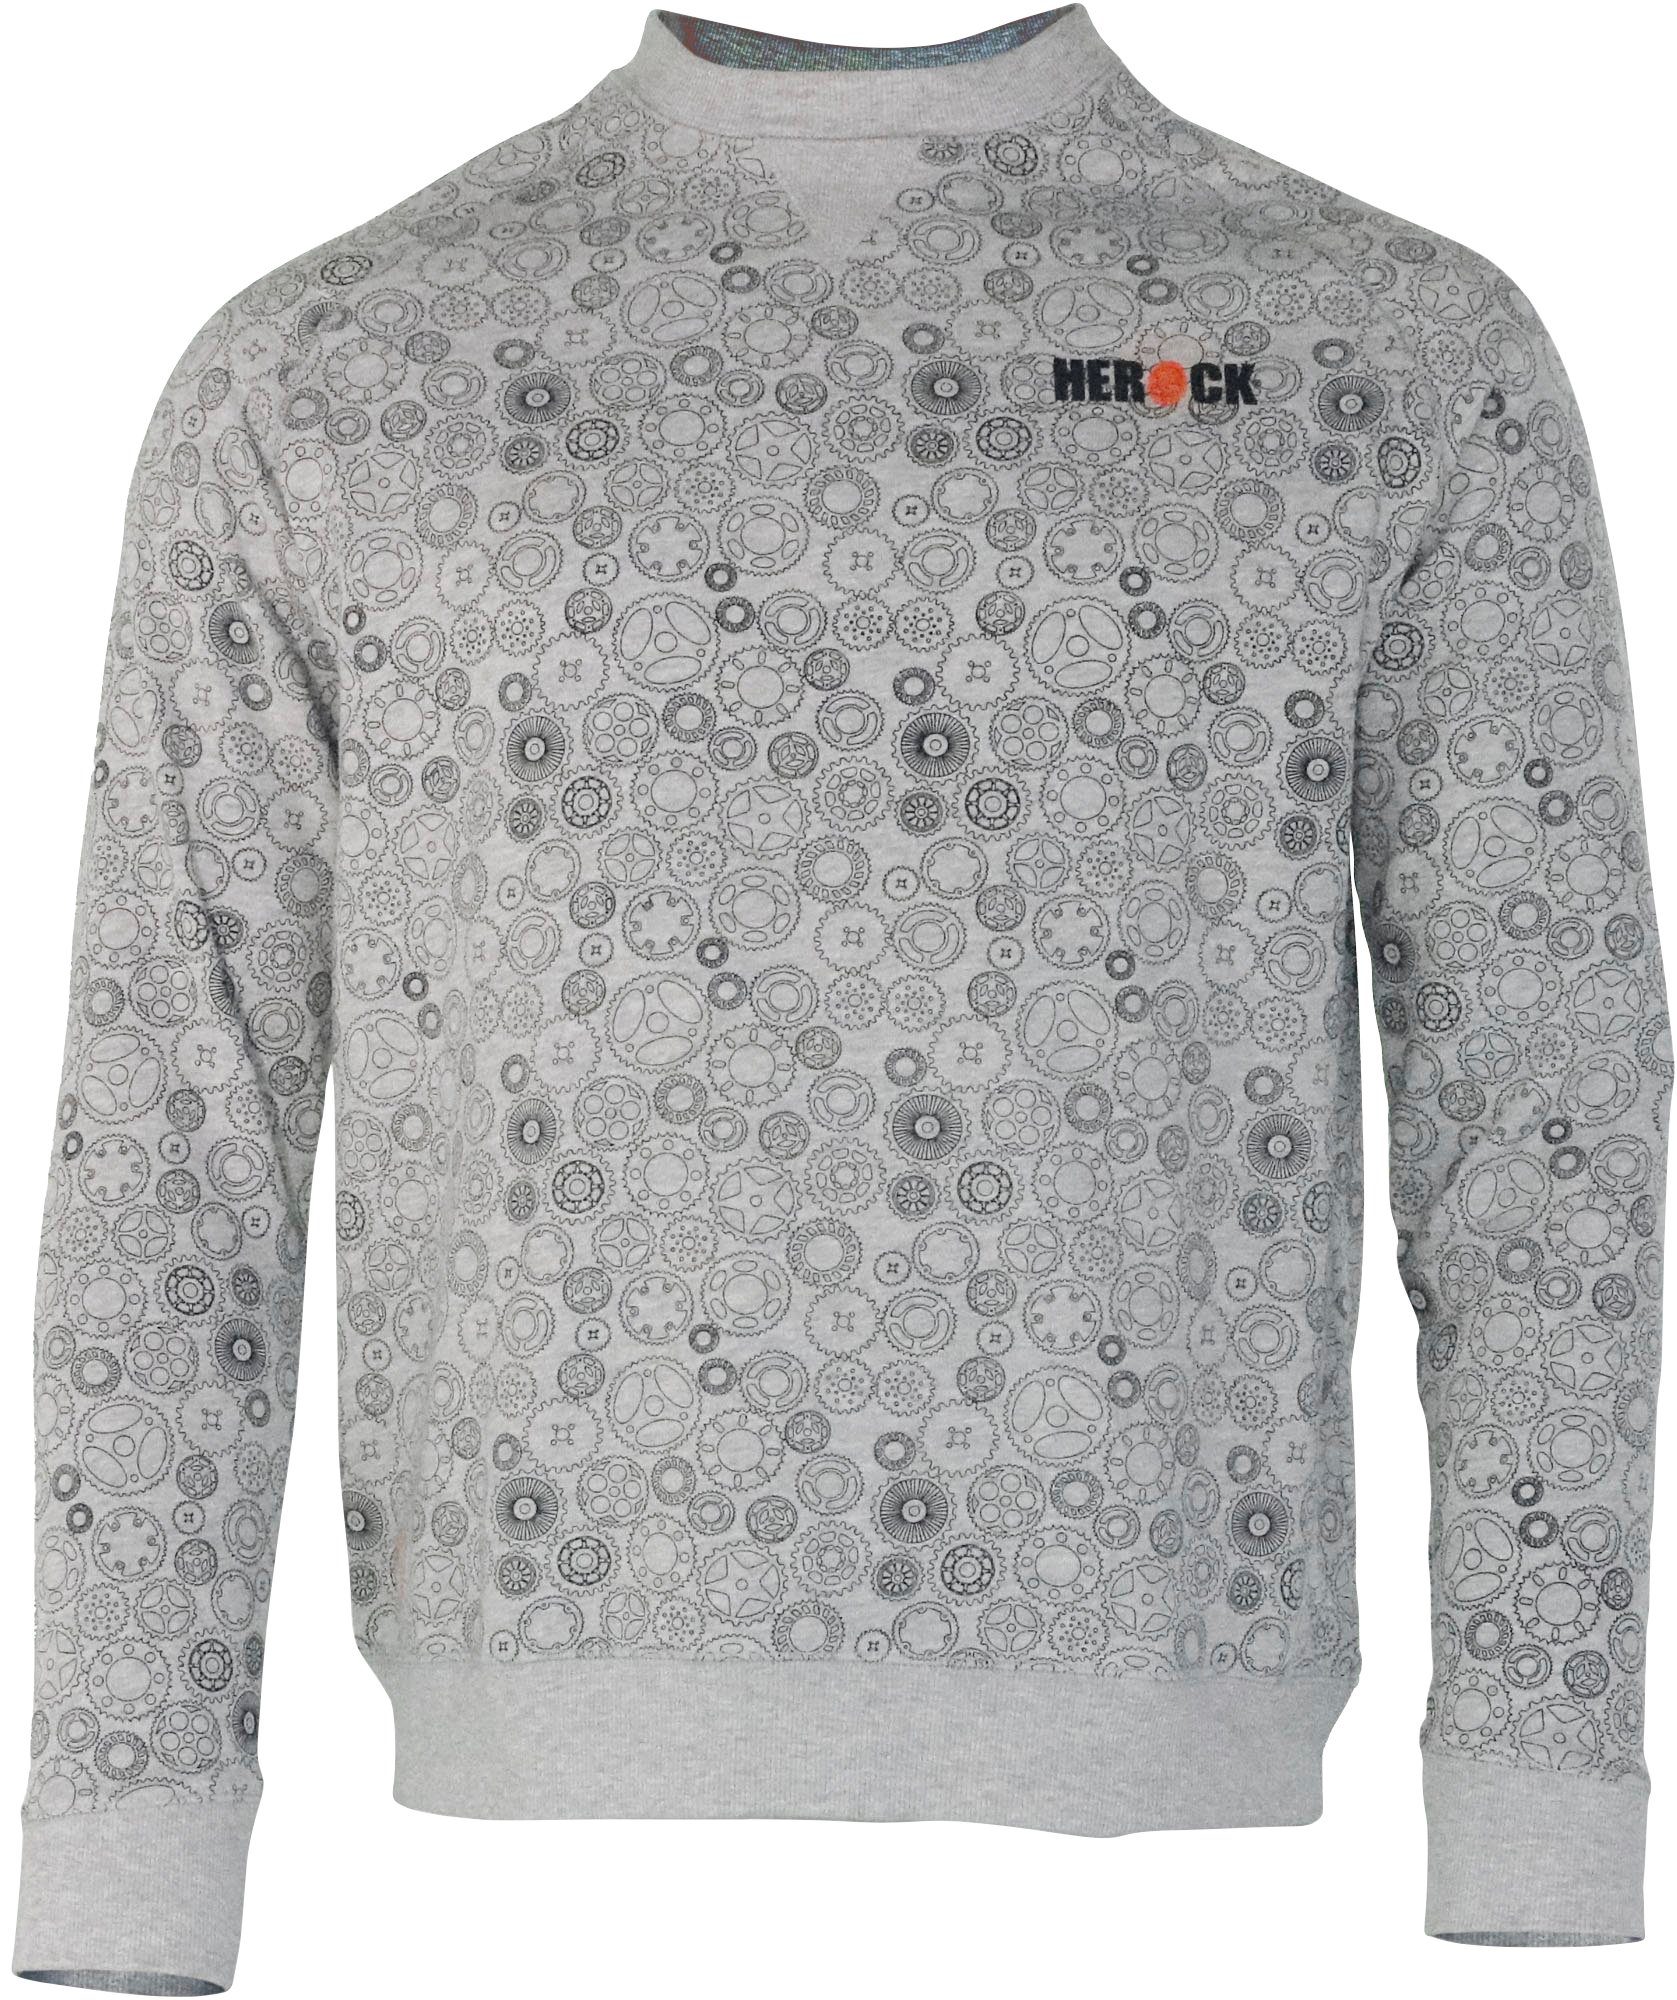 Herock Sweater Tragegefühl Engineer & angenehmes Herock®-Aufdruck, Zahnrad-Muster Mit